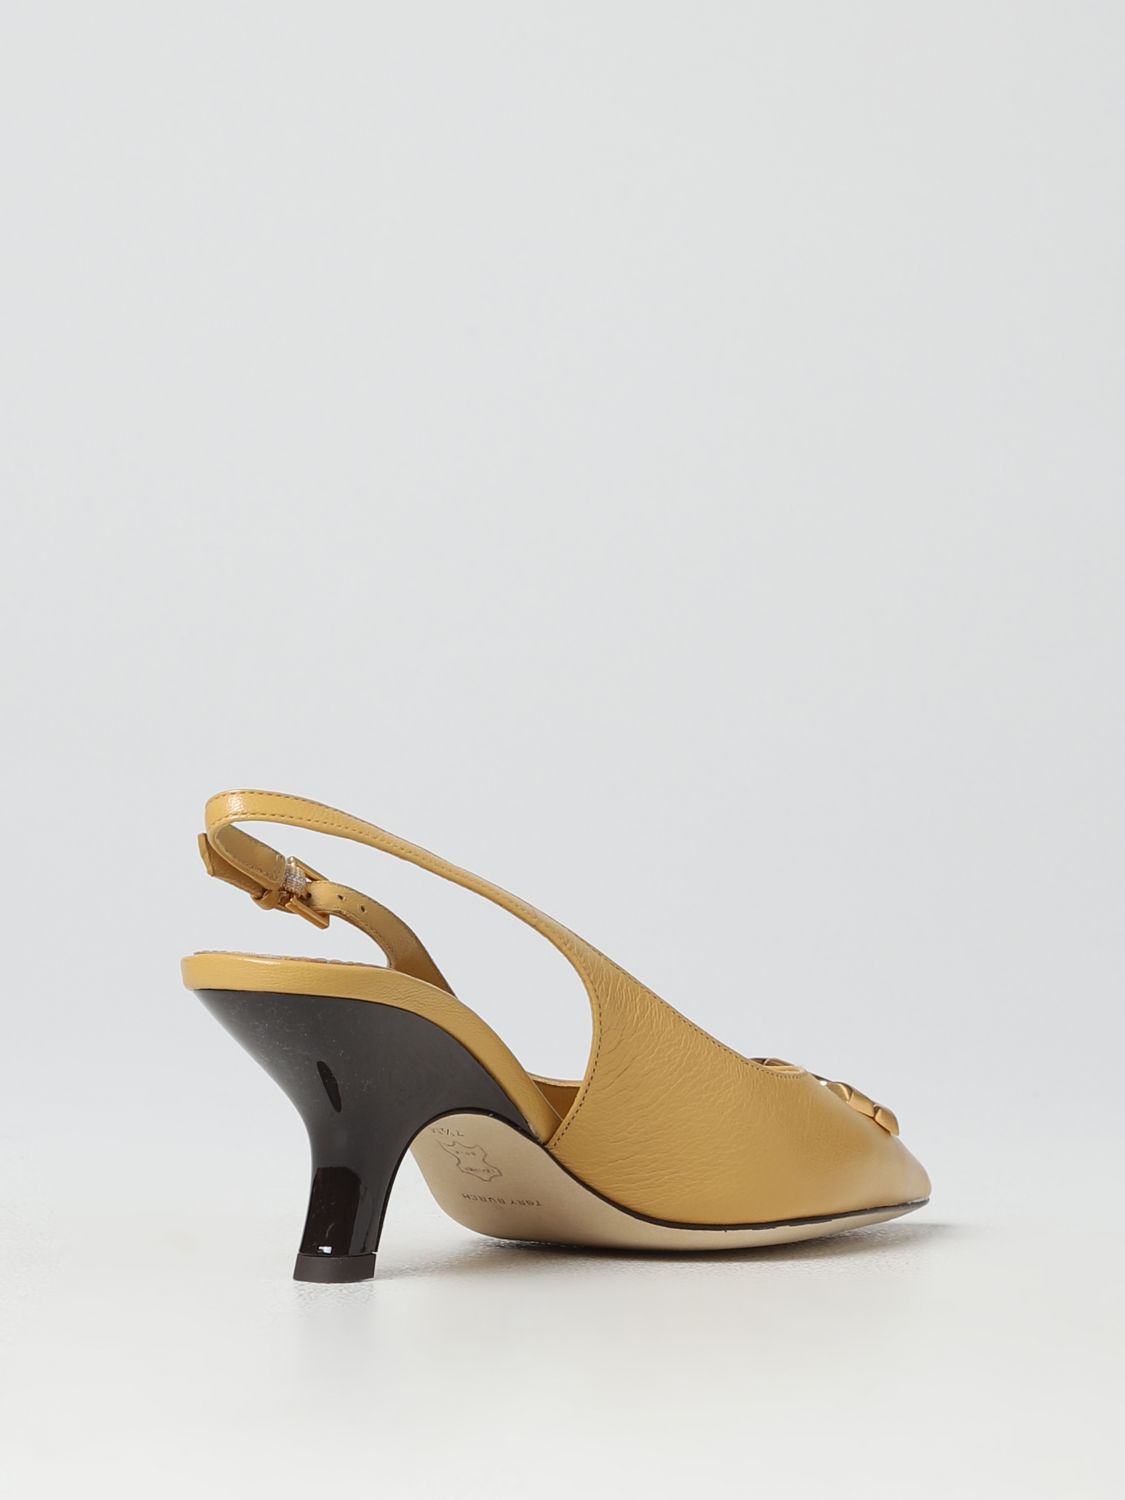 TORY BURCH: high heel shoes for woman - Sand | Tory Burch high heel ...